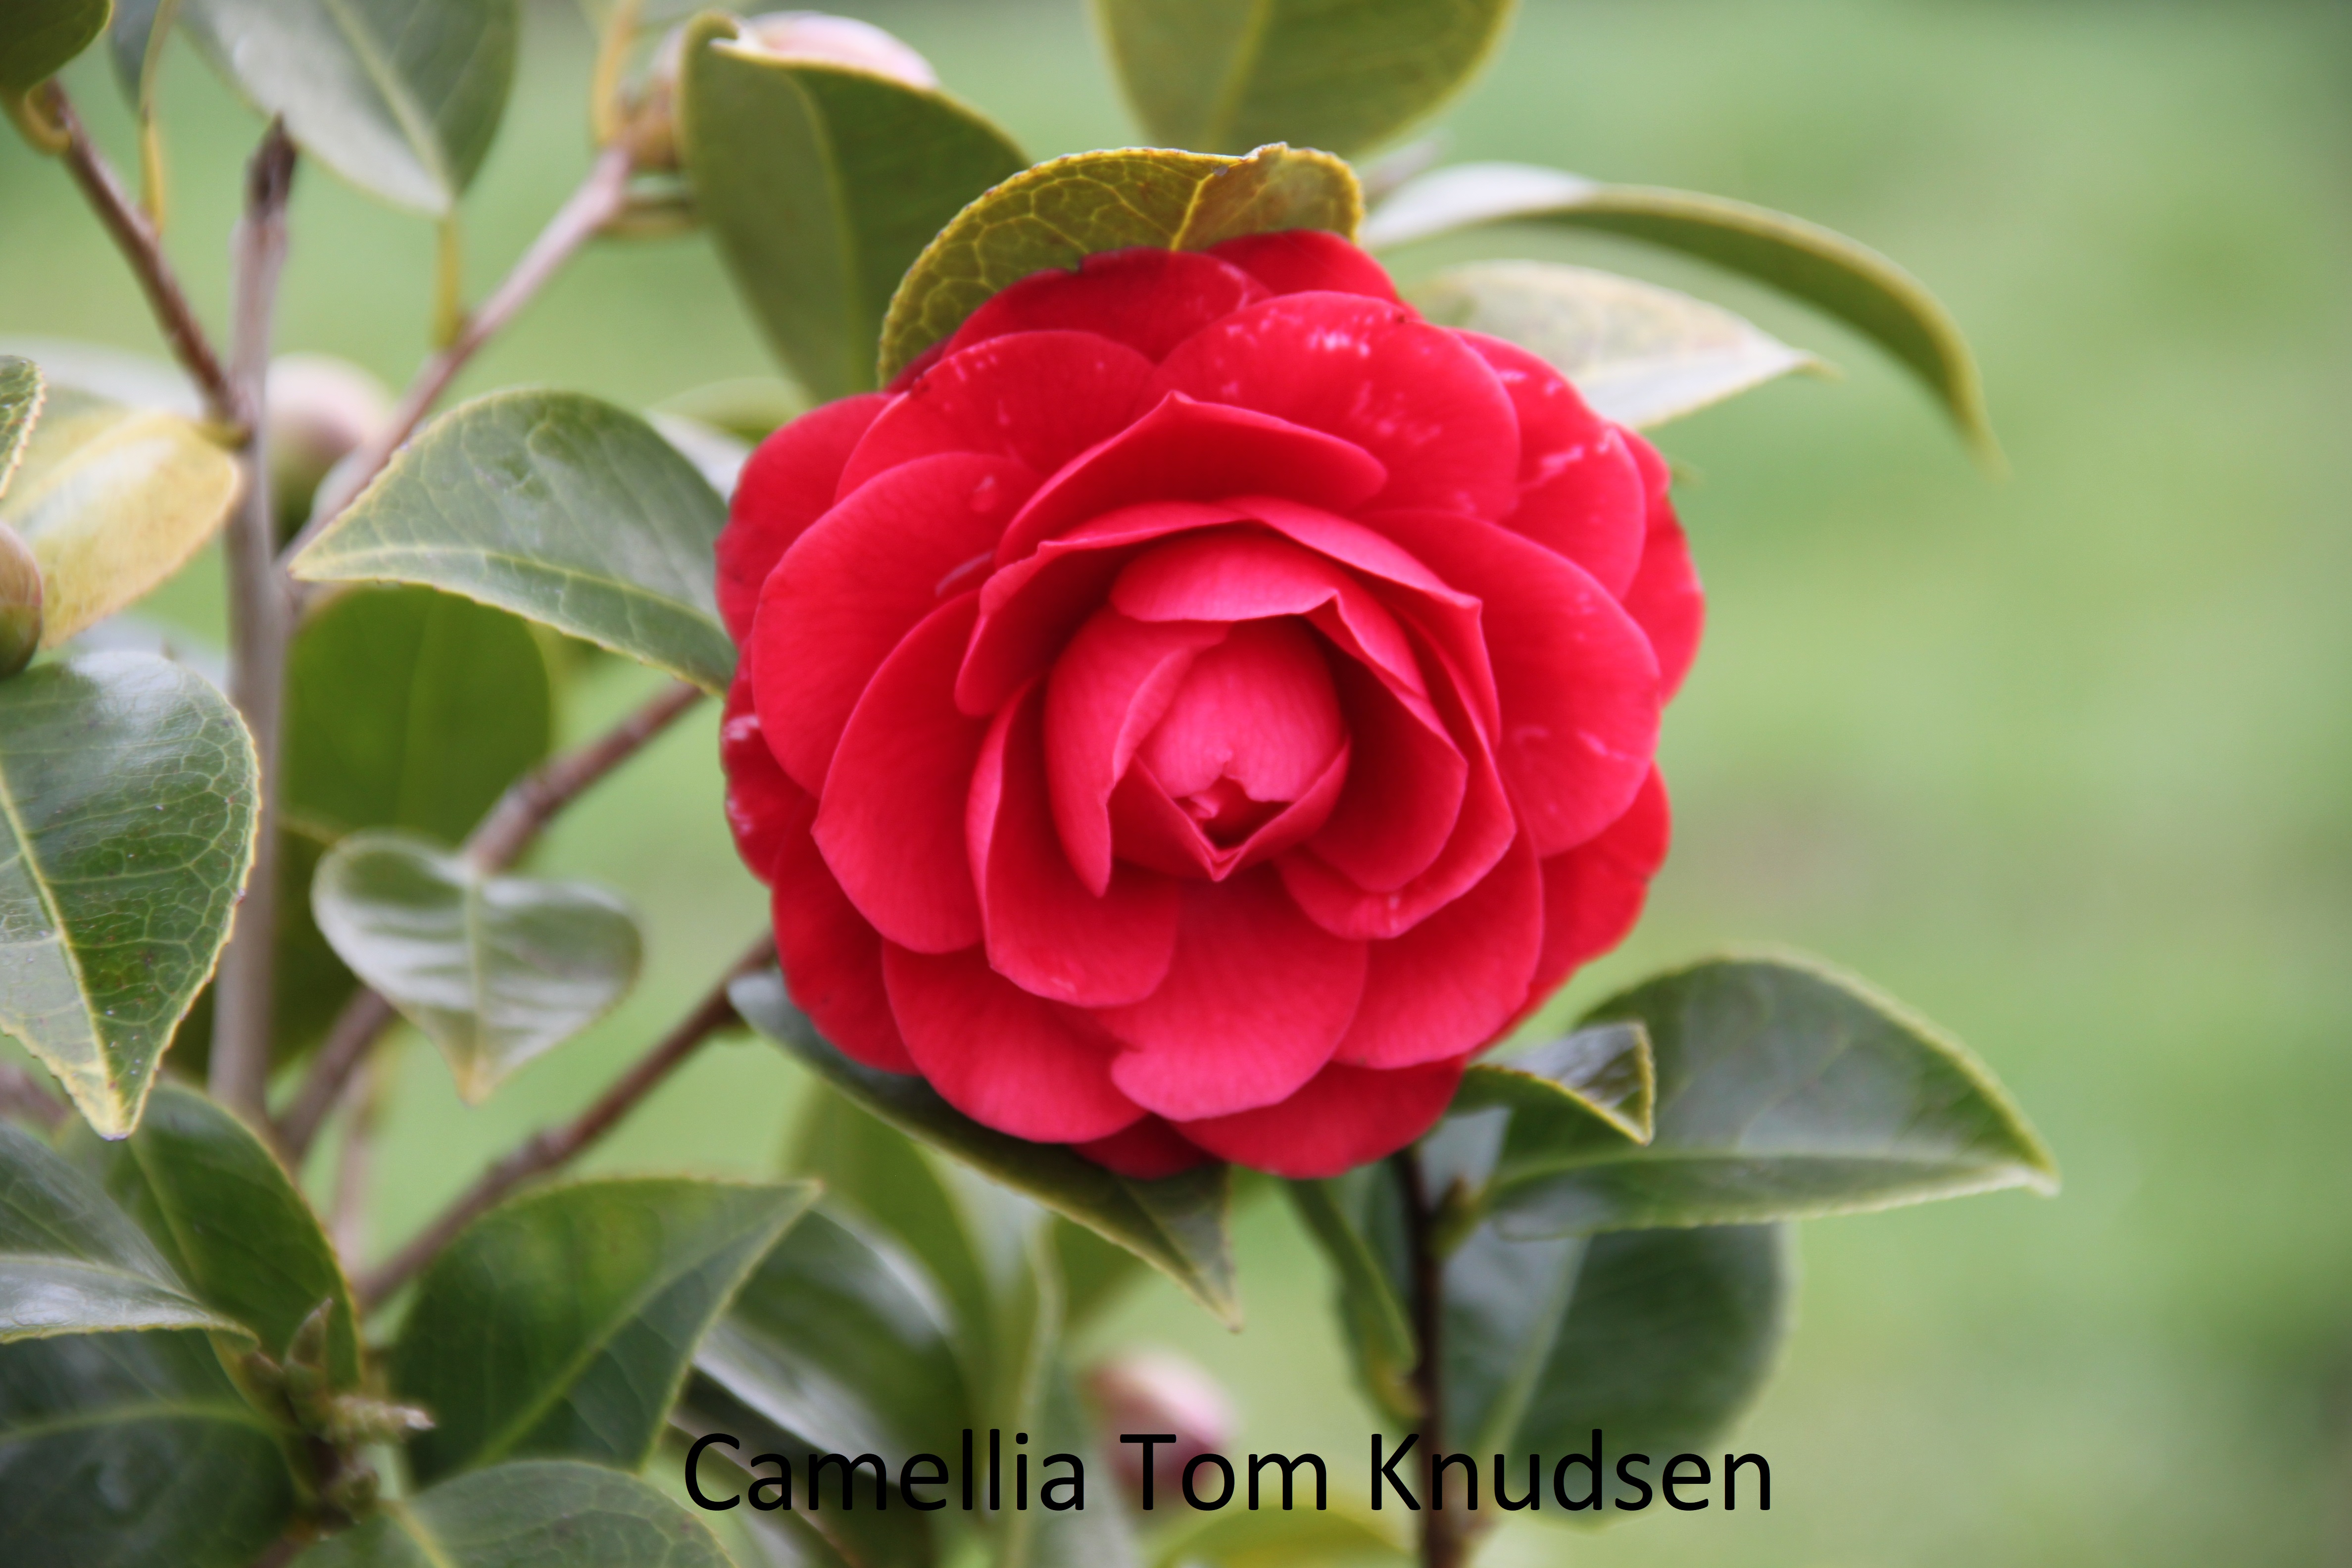 Camellia Tom Knudsen